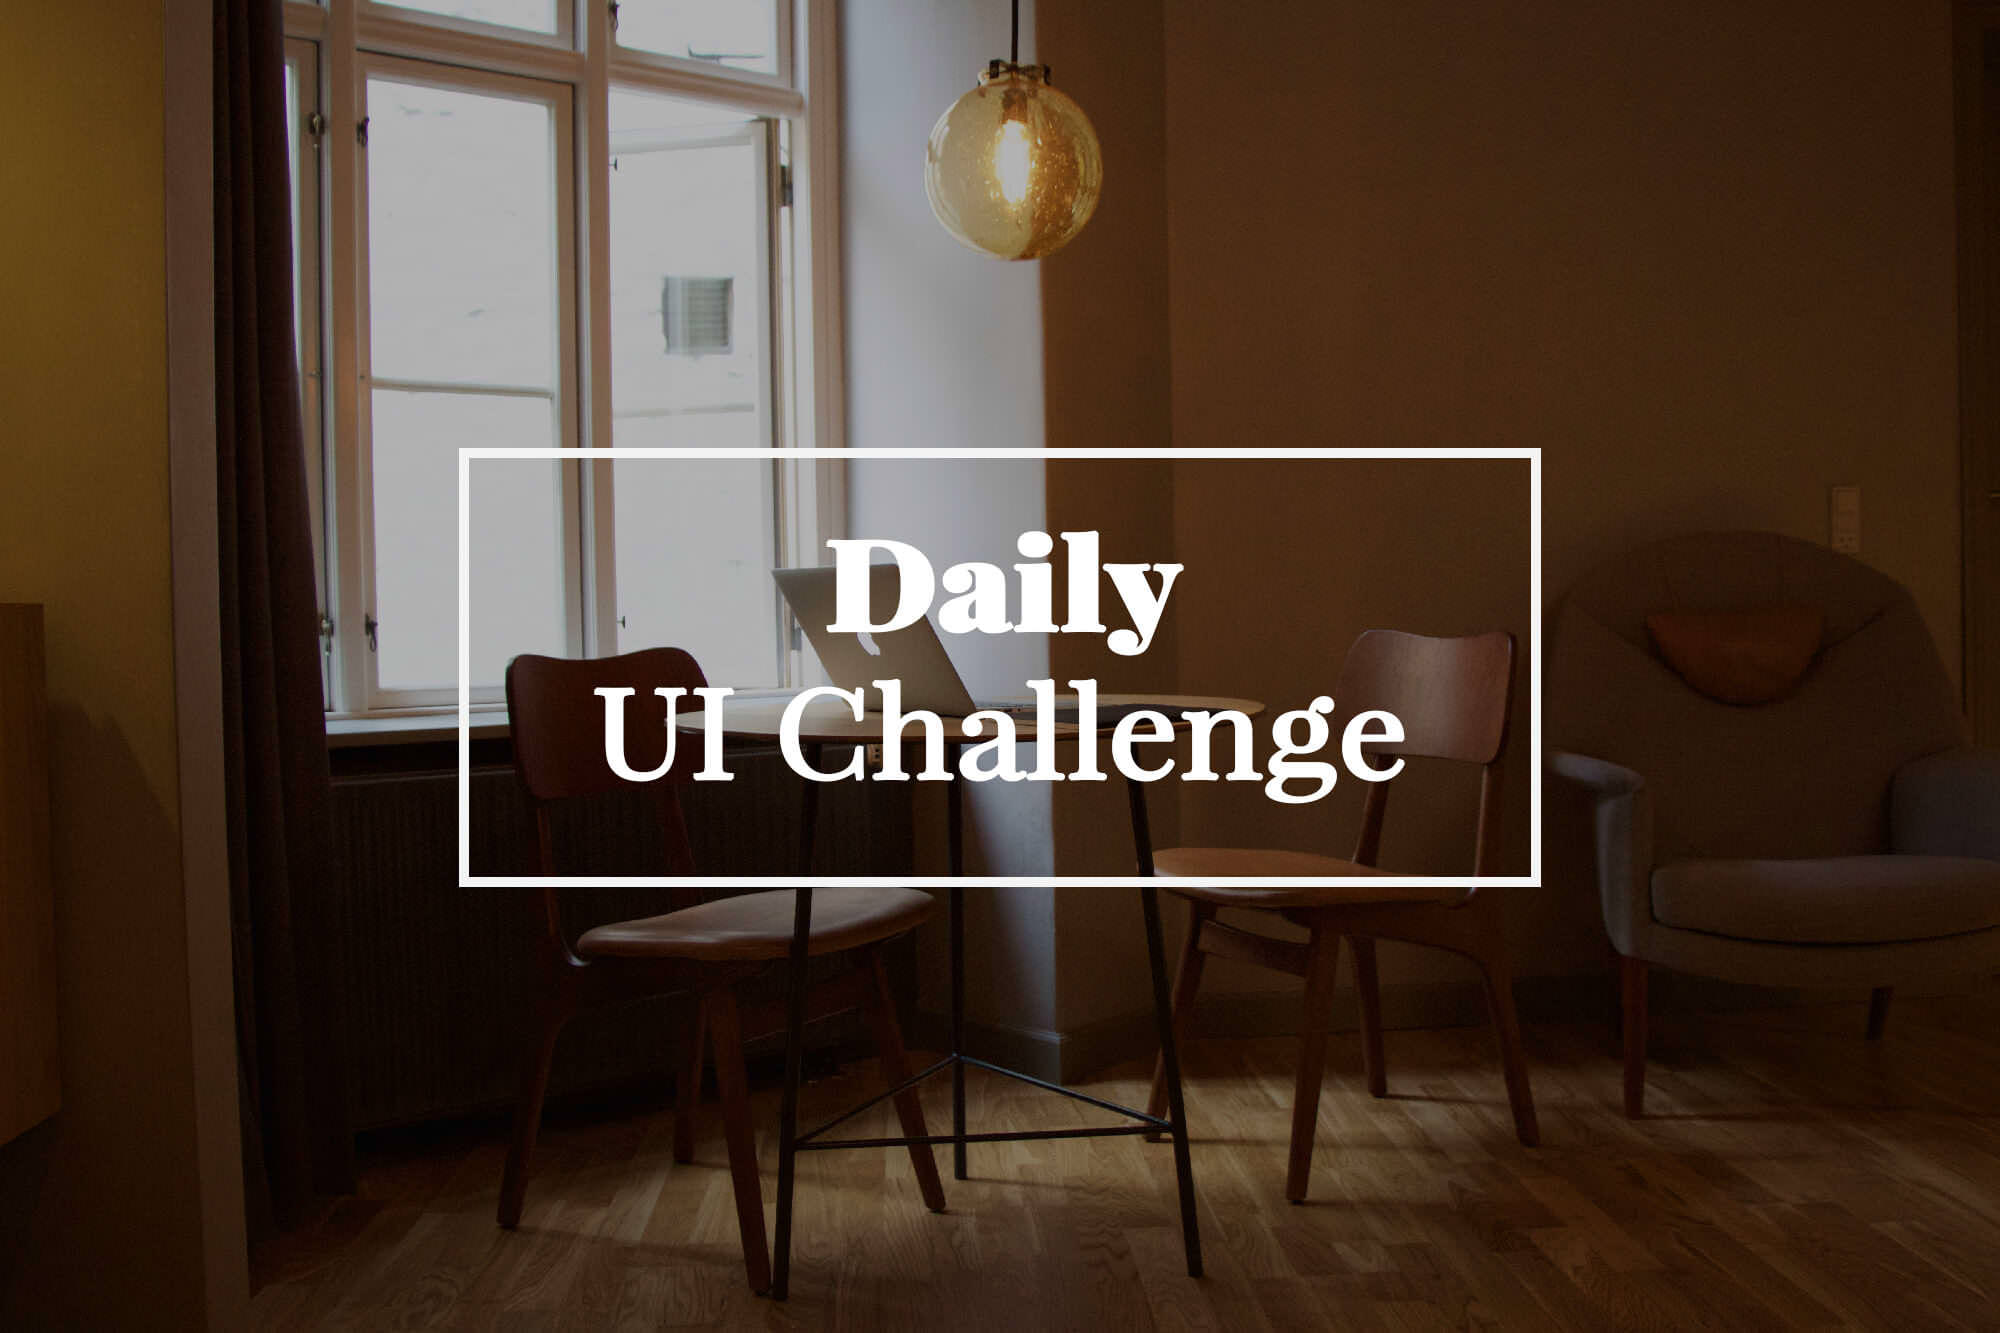 Daily UI Challenge, The Beginnings